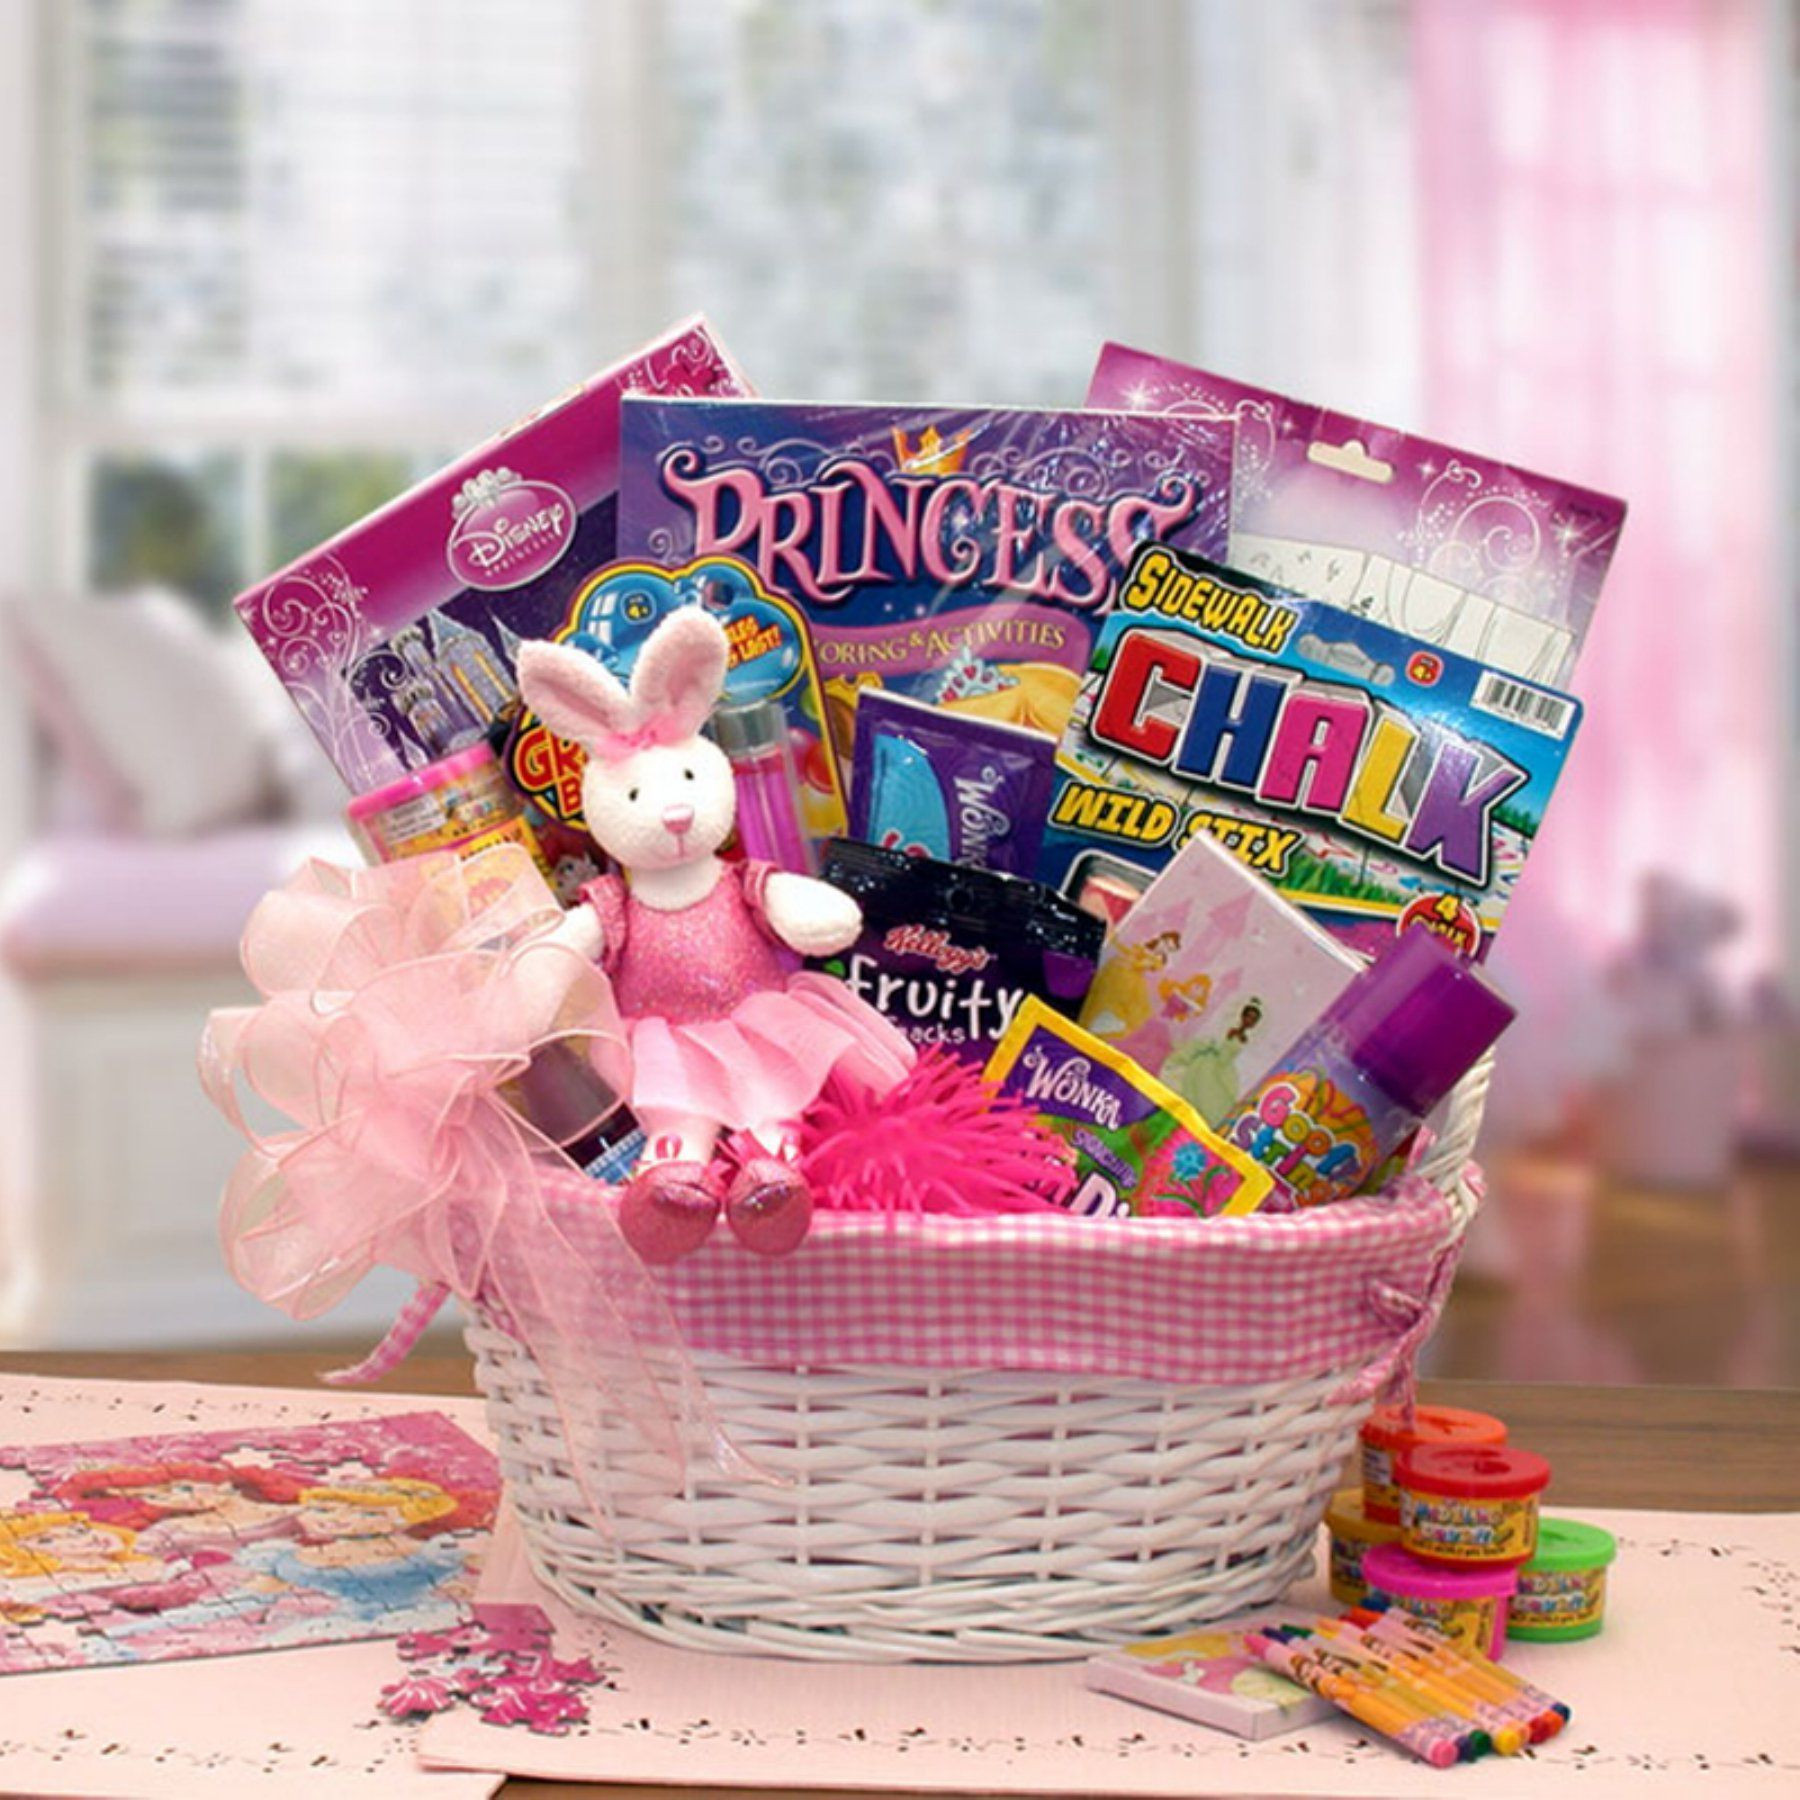 Princess Gift Basket Ideas
 A Little Disney Princess Gift Basket